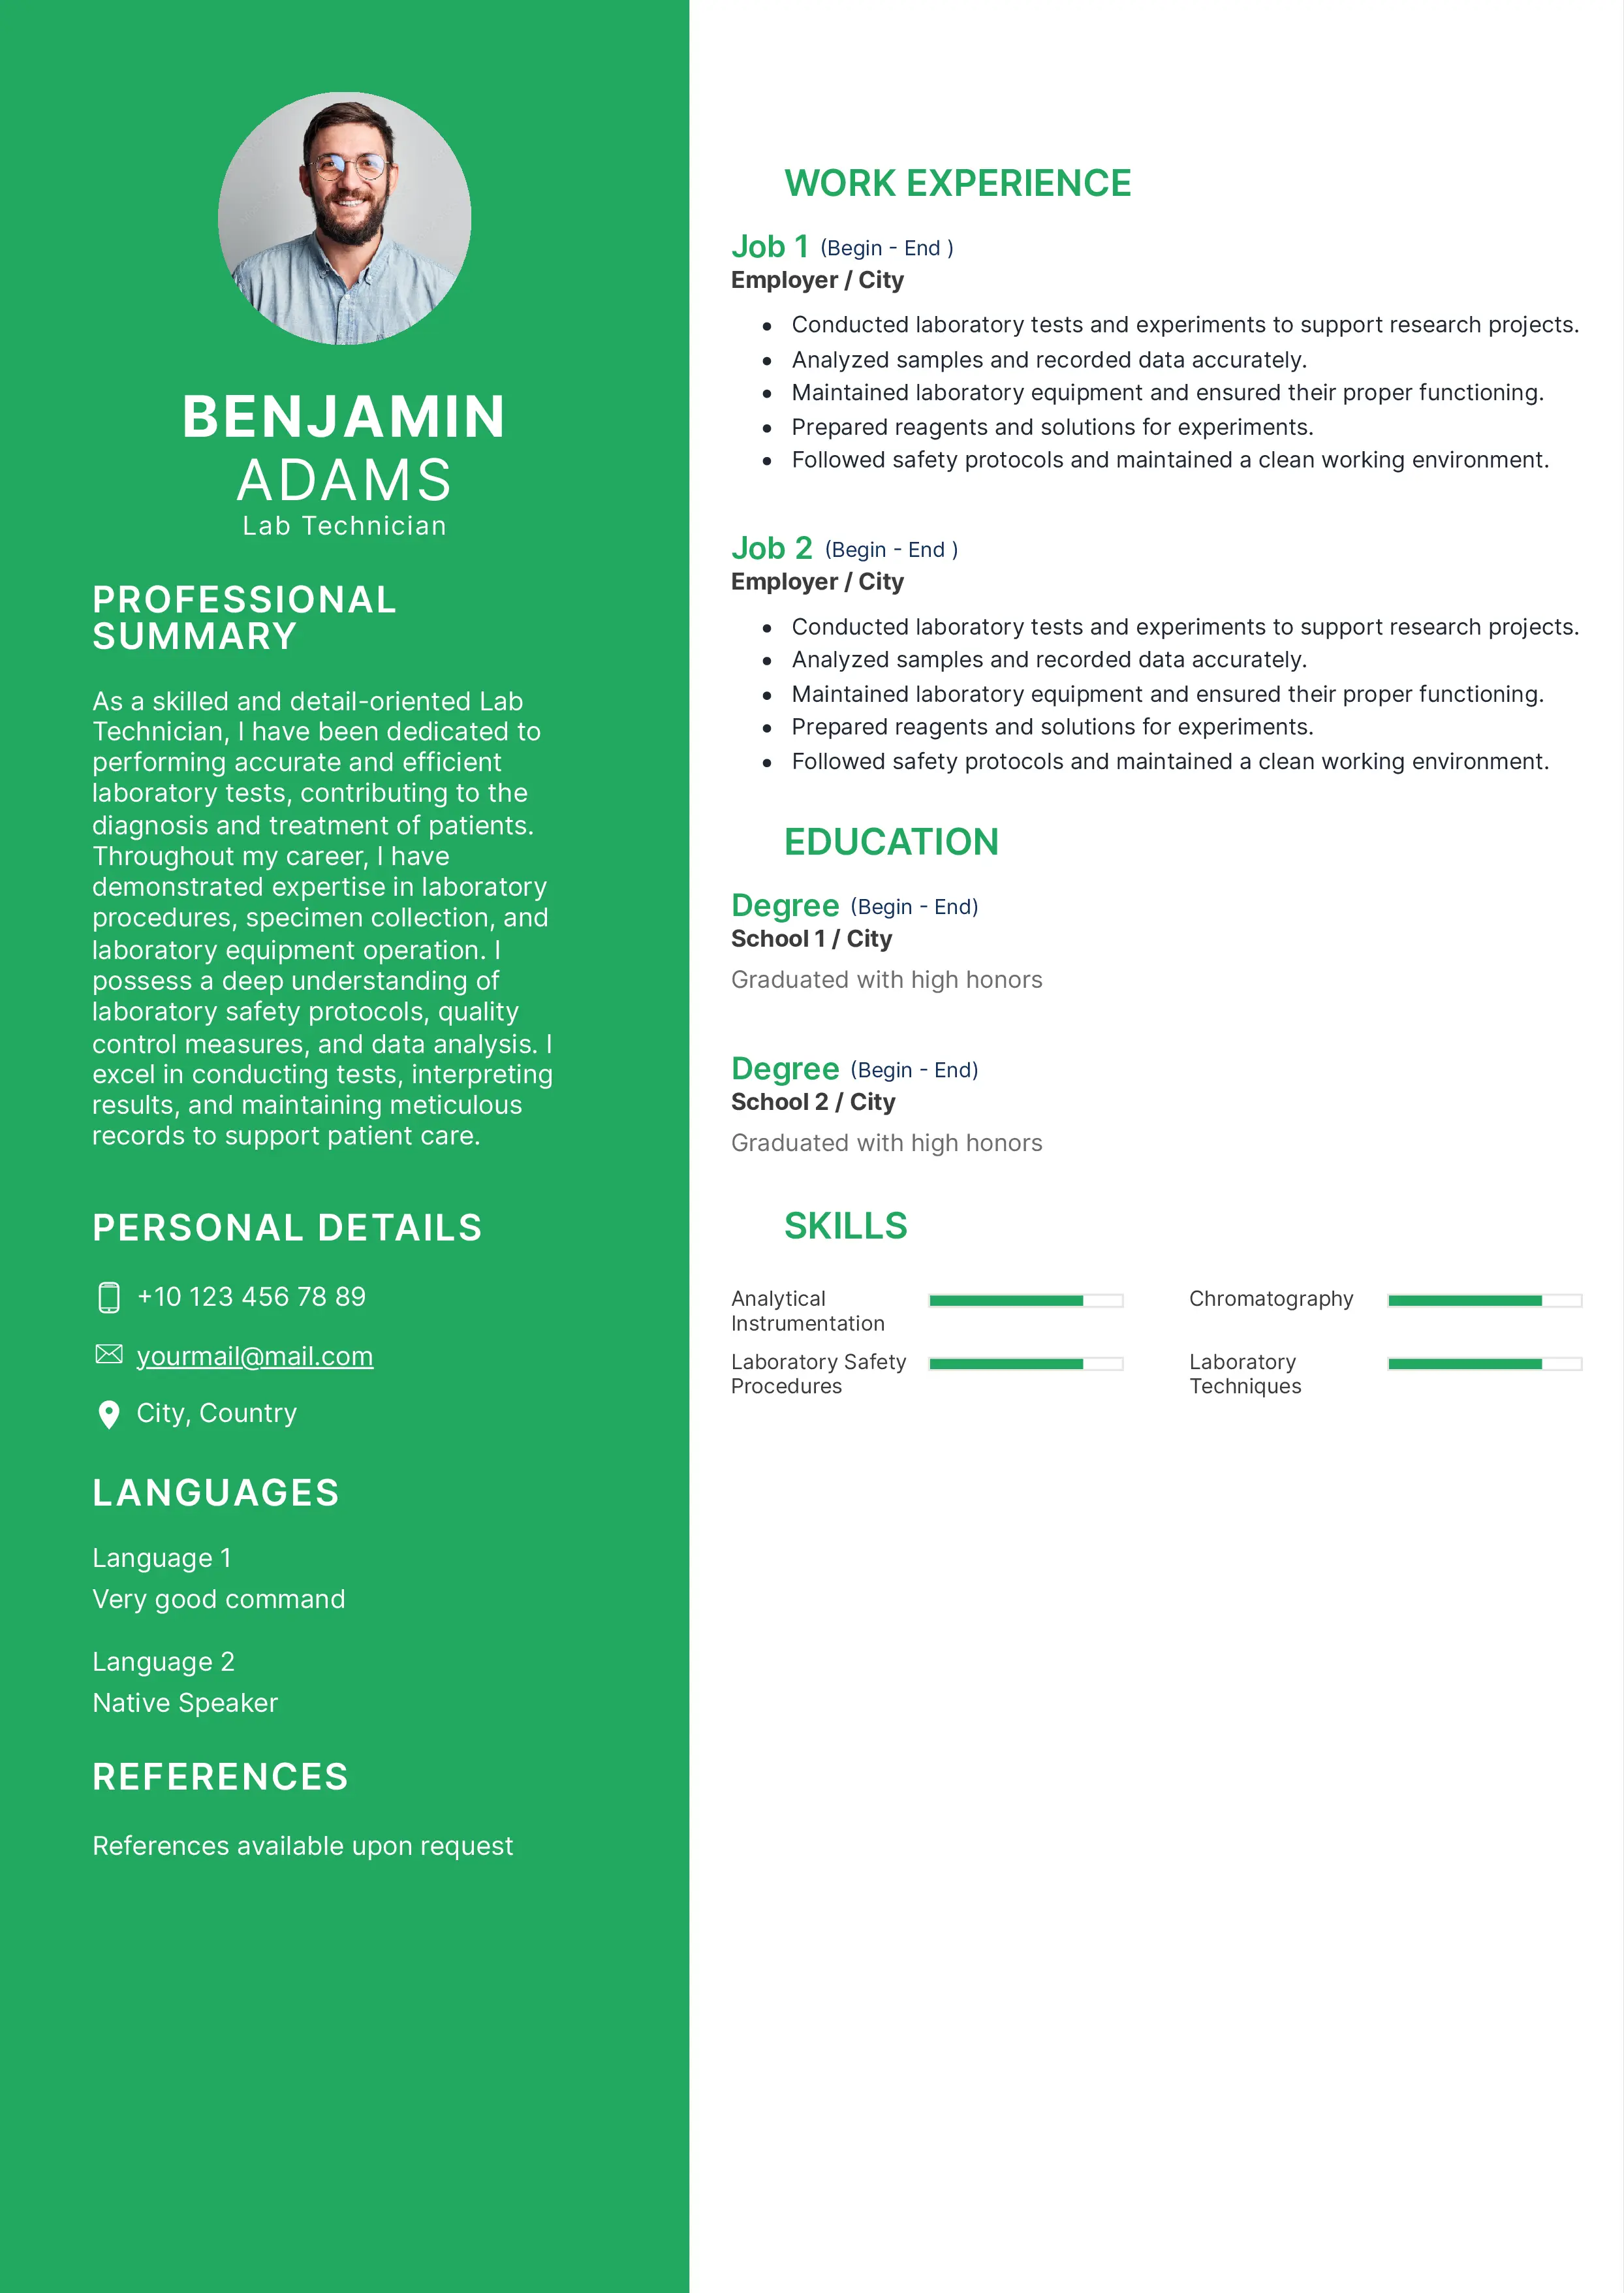 Lab technician resume CV